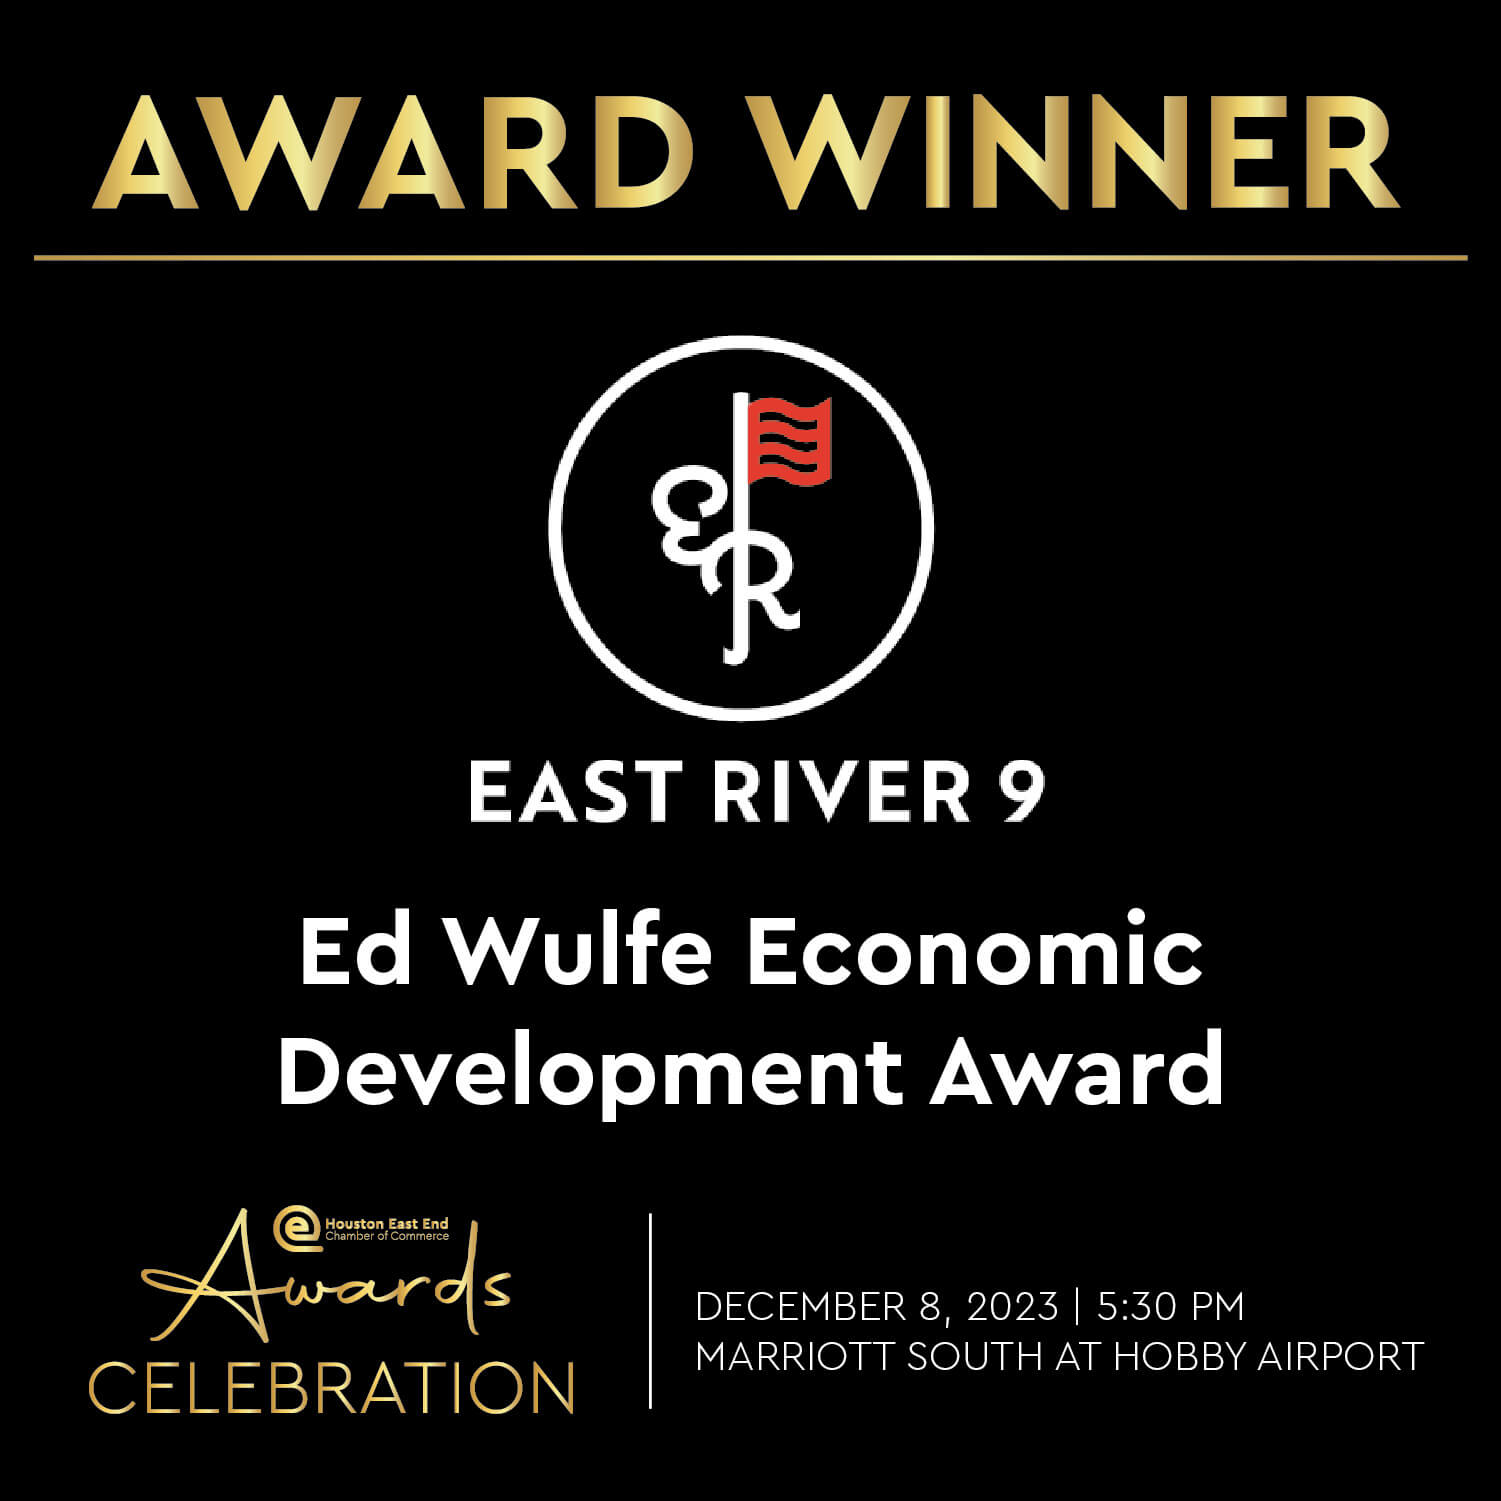 SM Awards - Ed Wulfe Economic Development